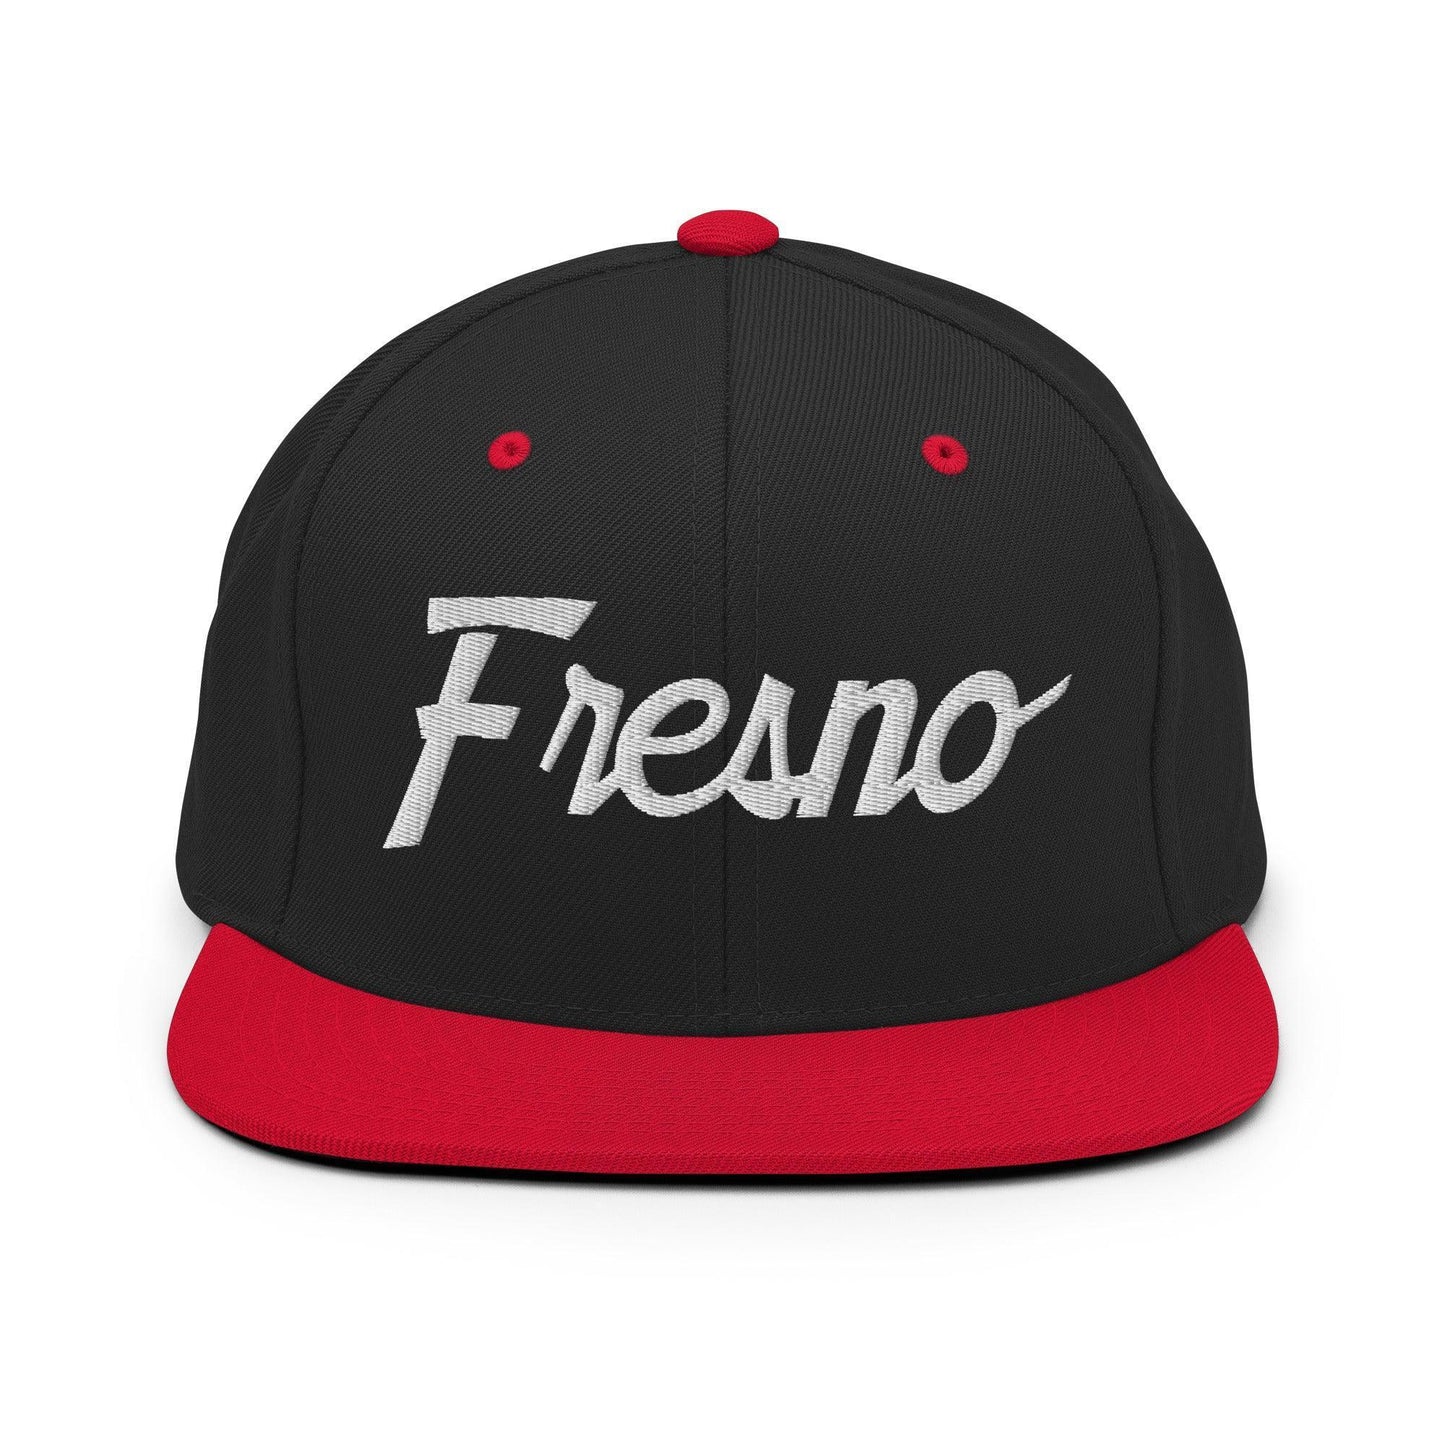 Fresno Script Snapback Hat Black Red